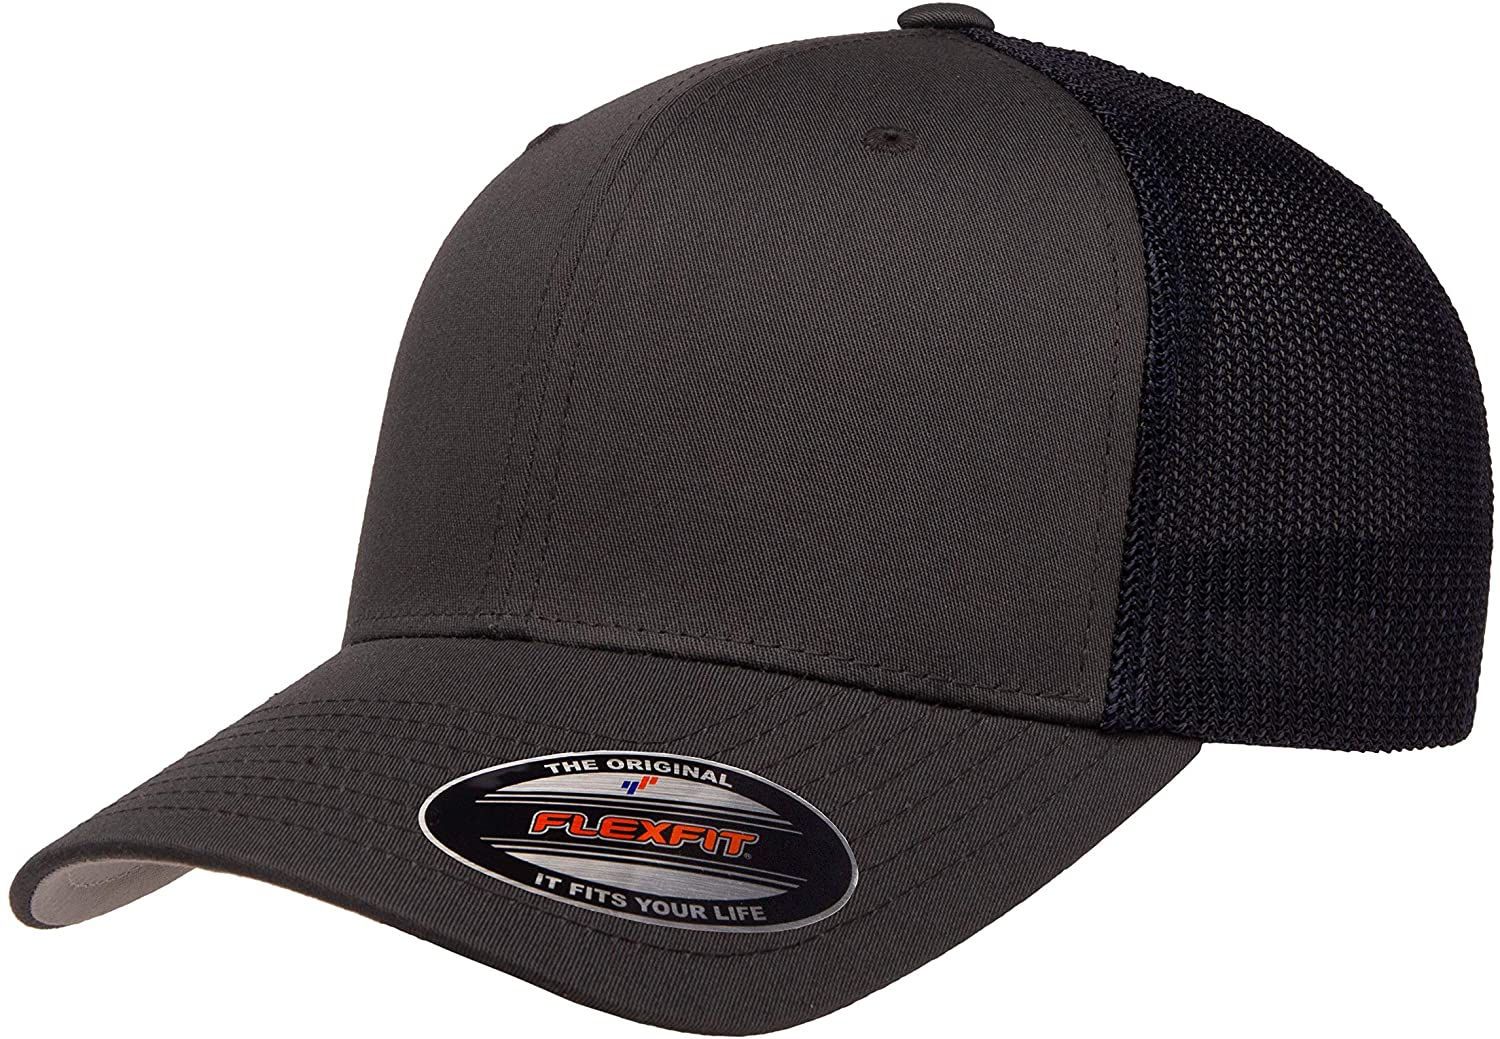 Flexfit Unisex-Adults Trucker Mesh Cap Black